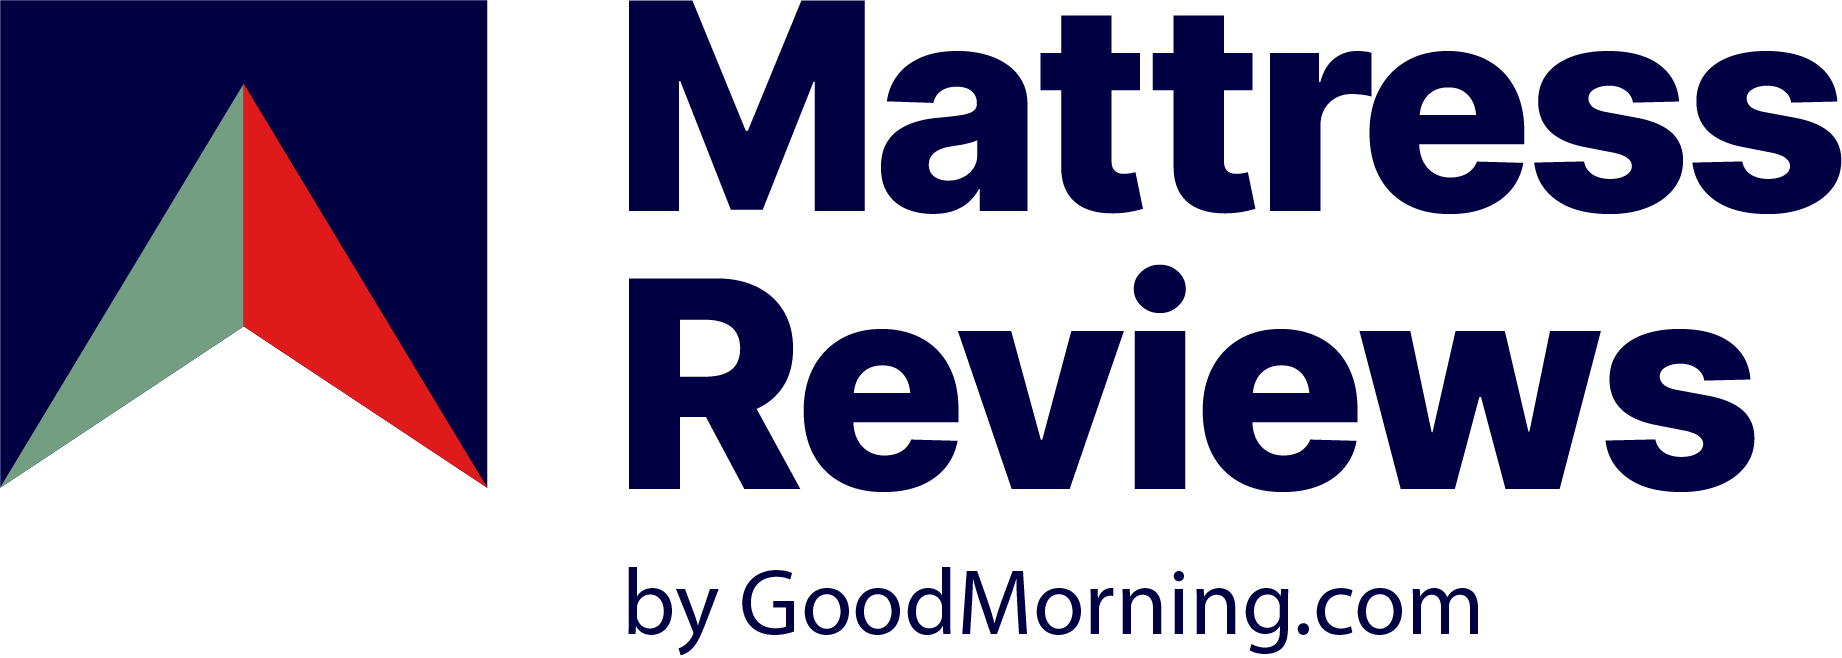 Mattress Reviews by GoodMorning.com Logo